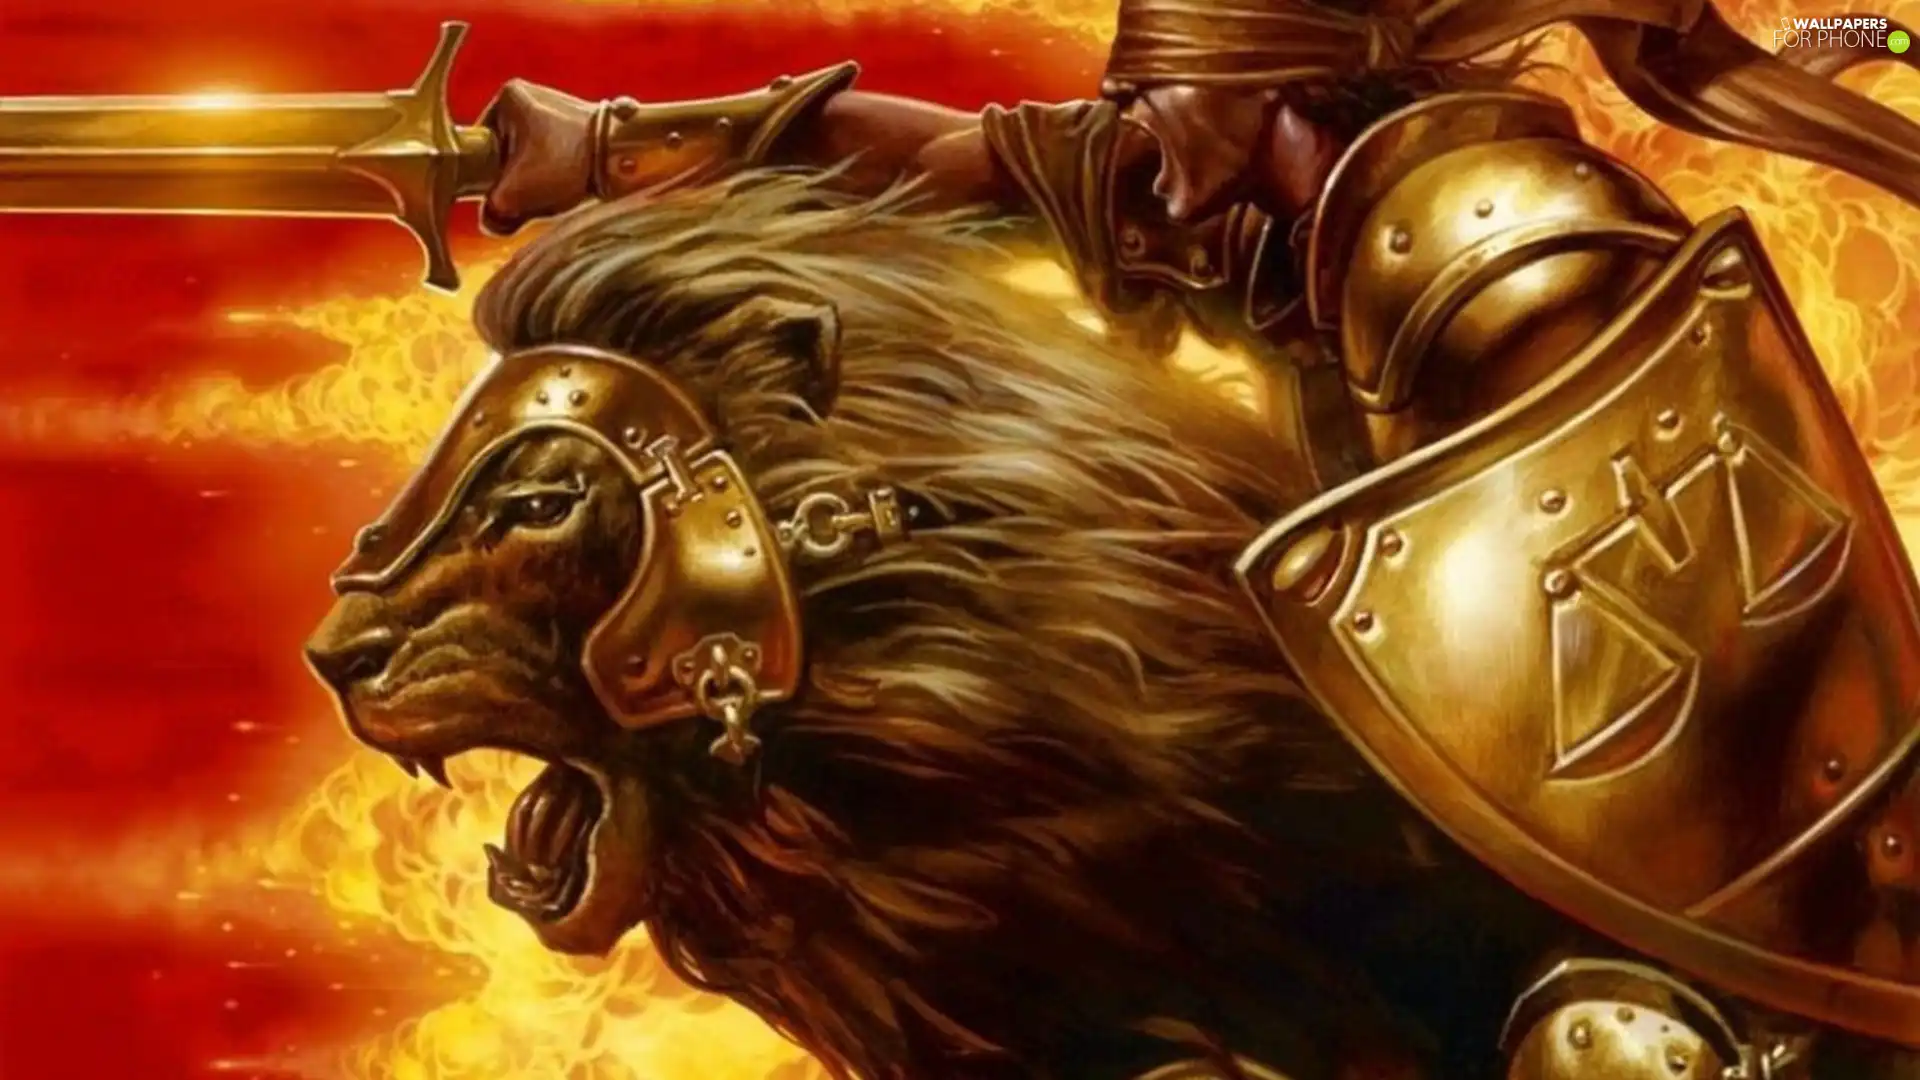 Big Fire, Lion, fighter